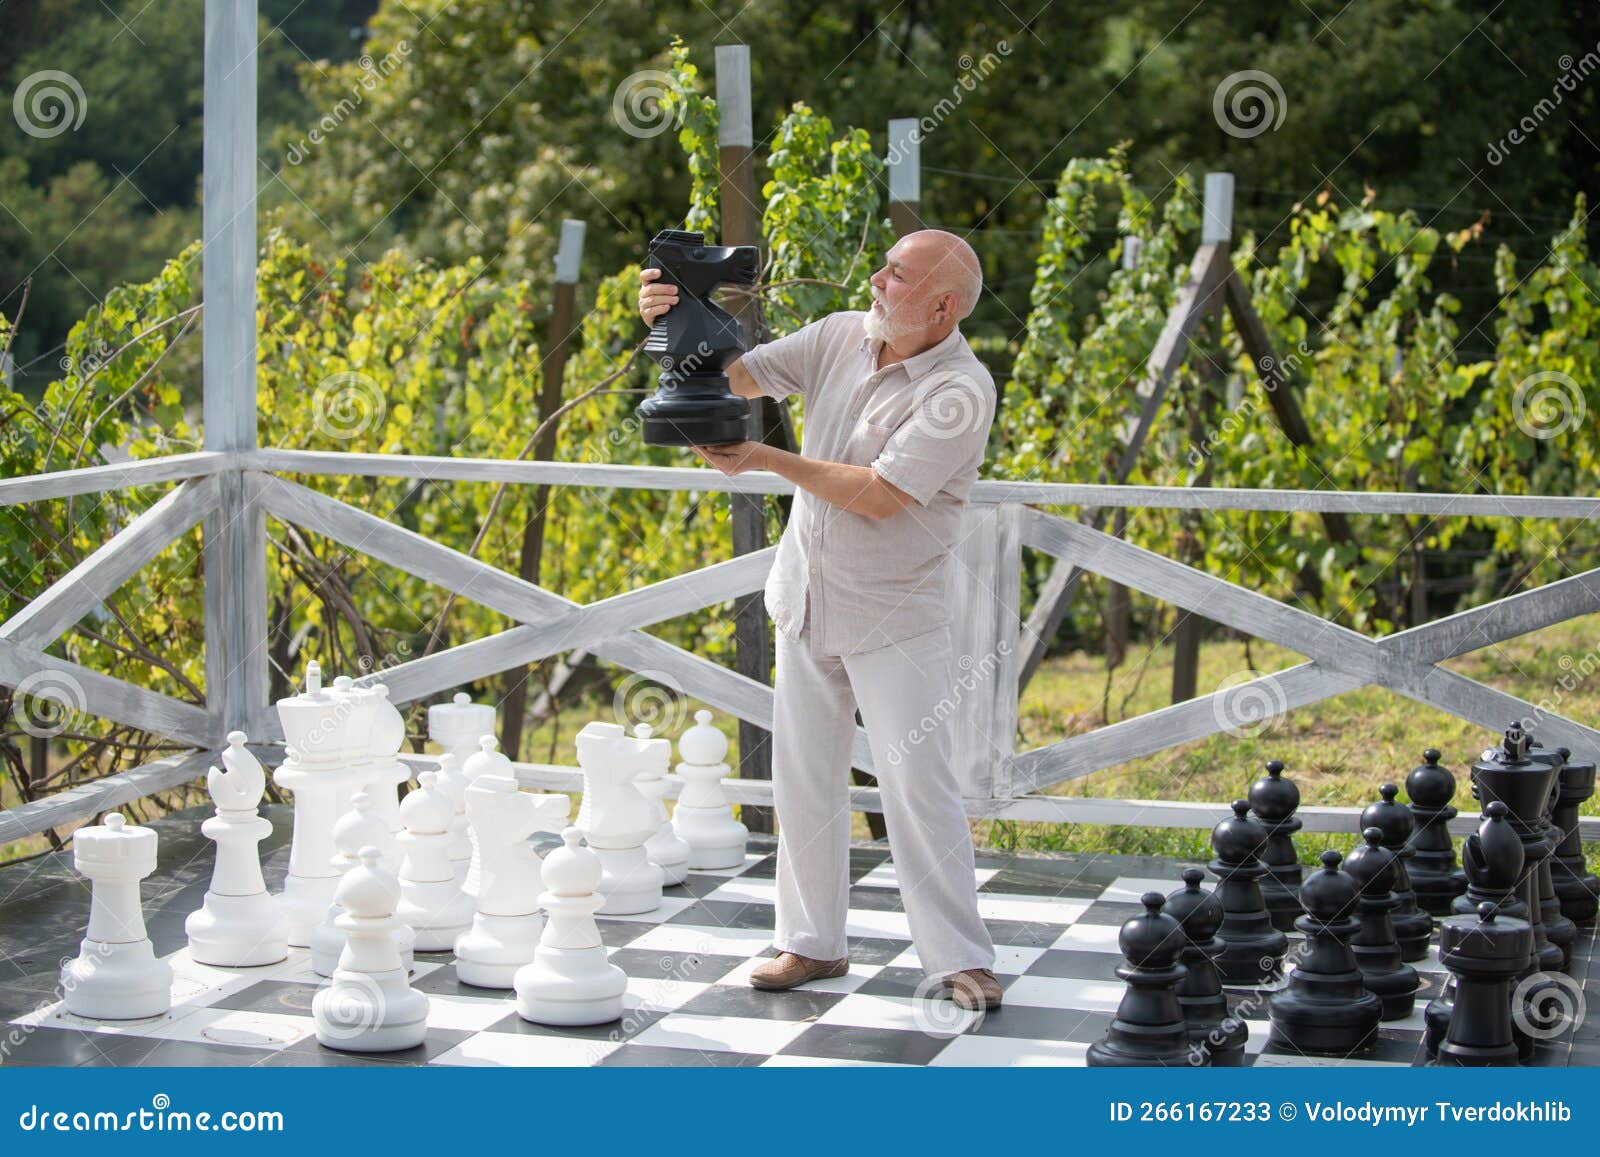 Grande mestre de terno jogando xadrez